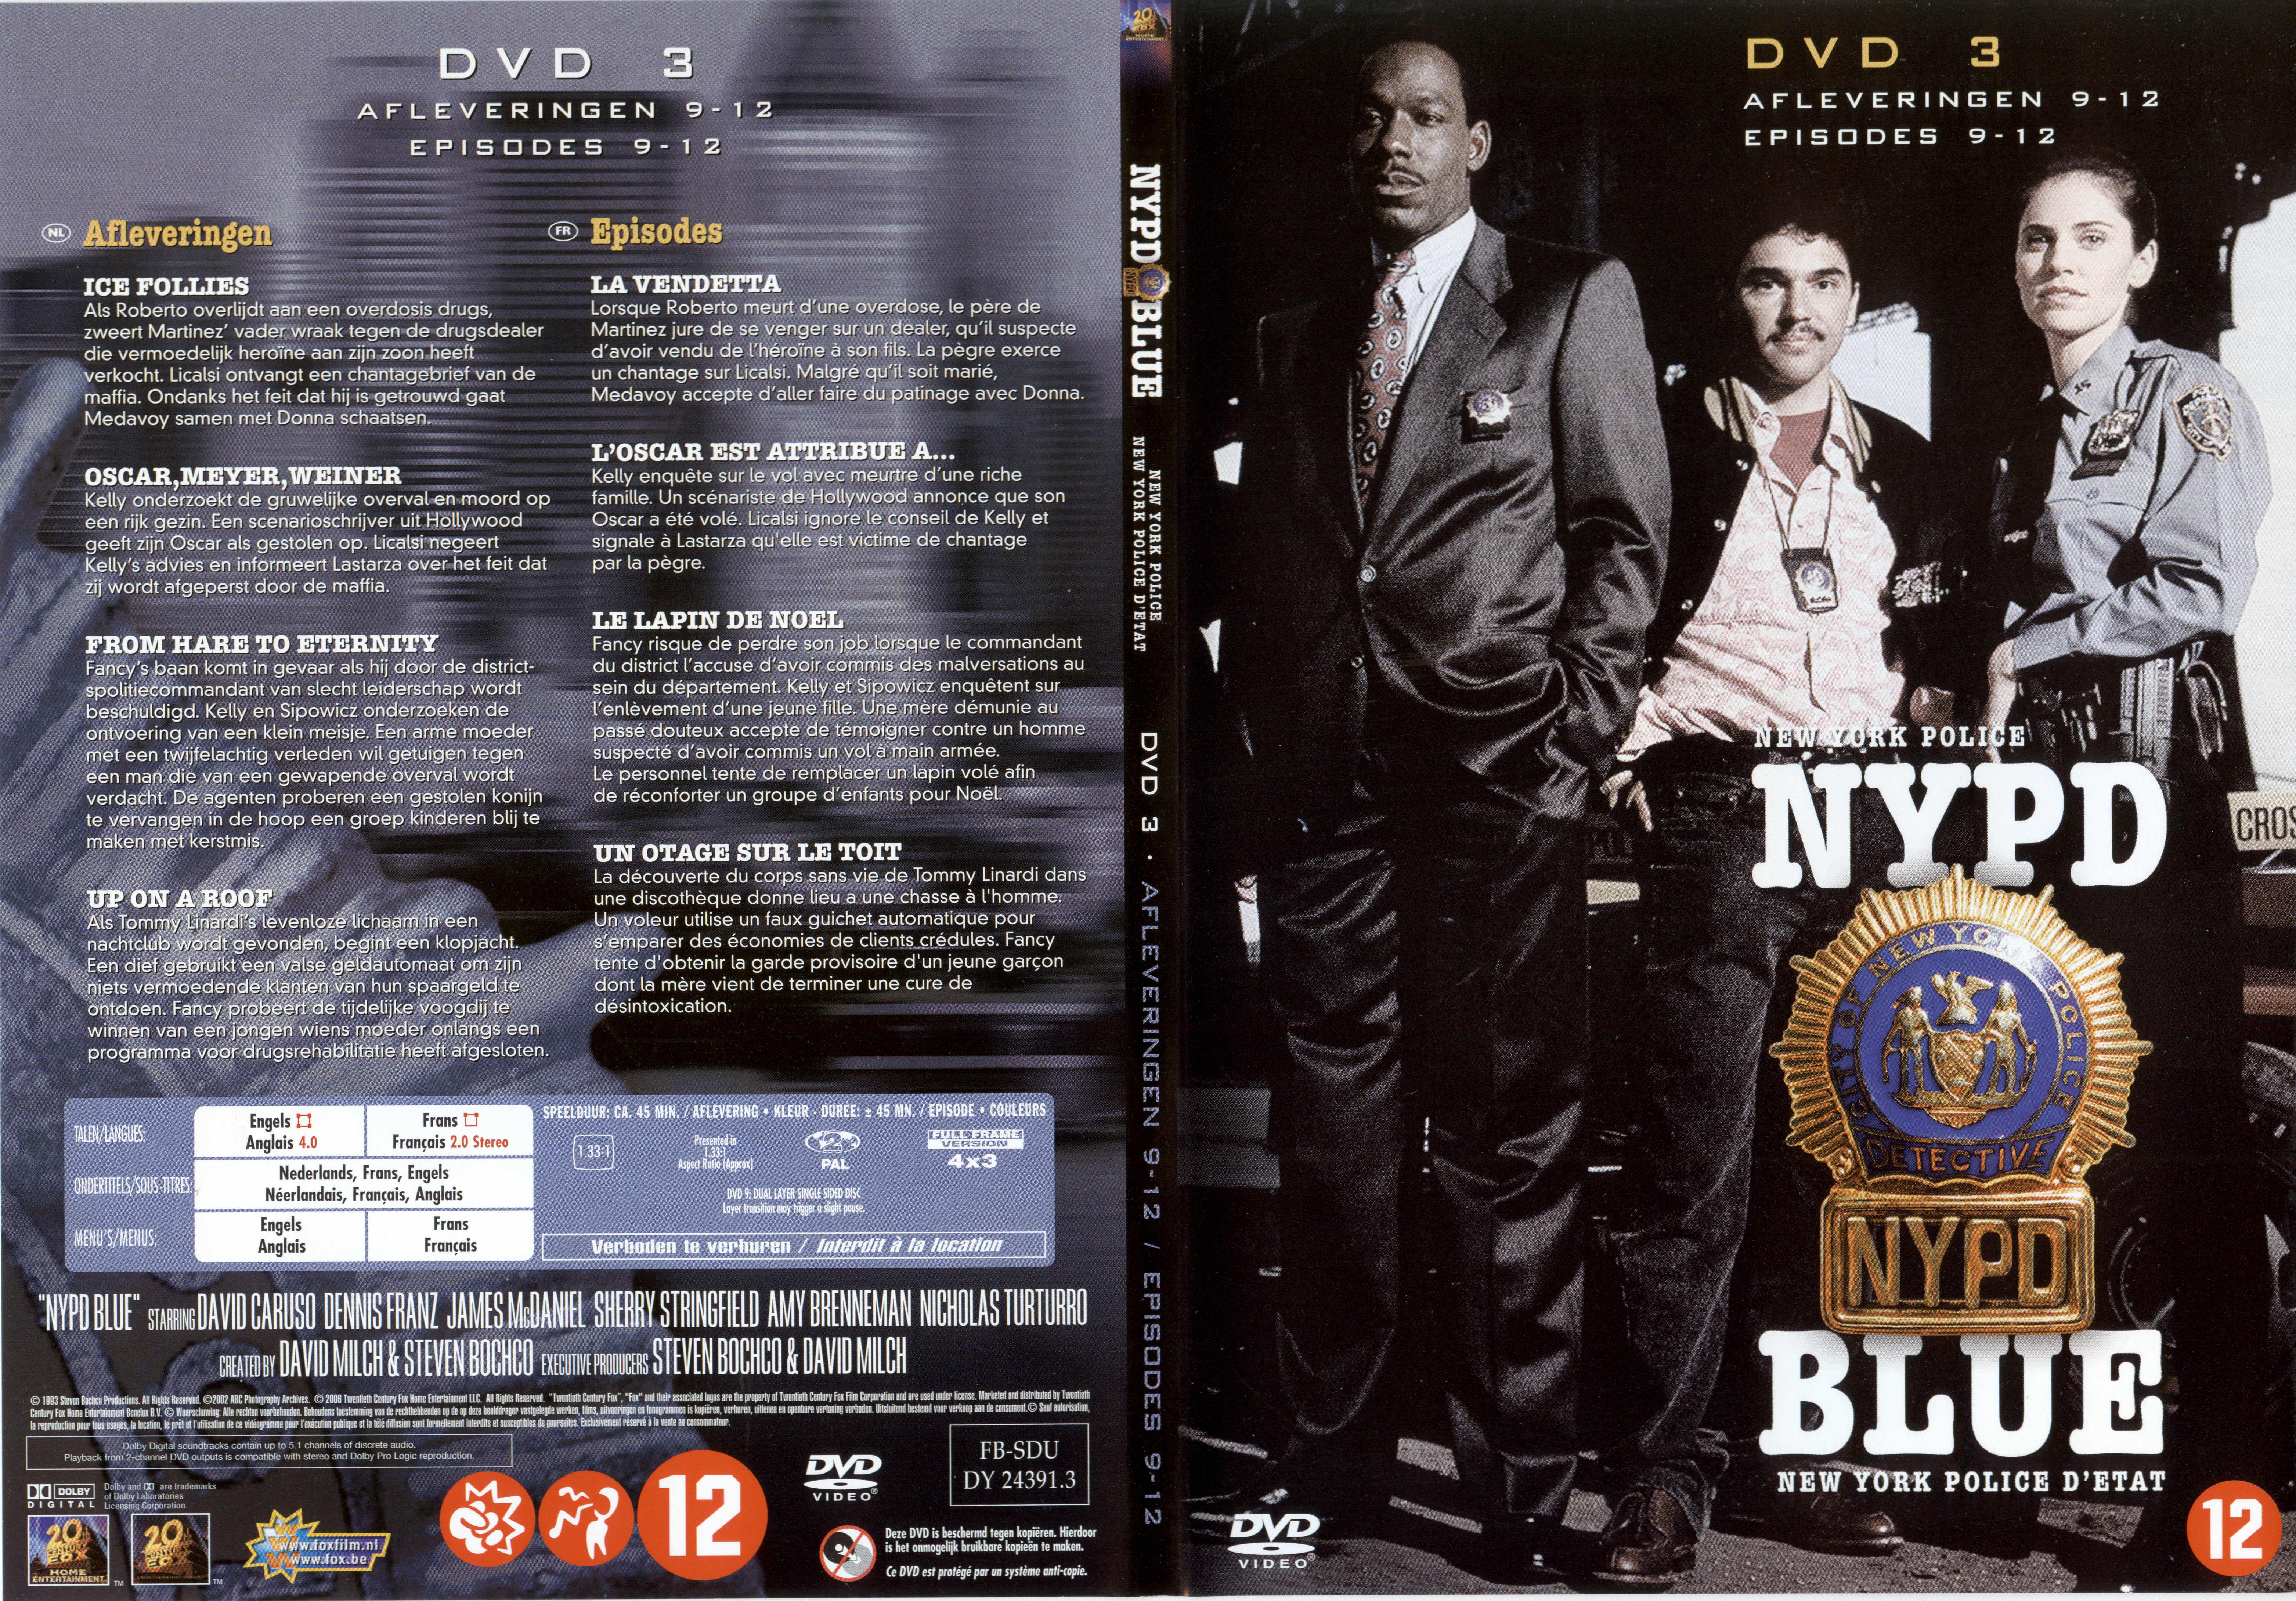 Jaquette DVD NYPD Blue saison 01 dvd 03 v2